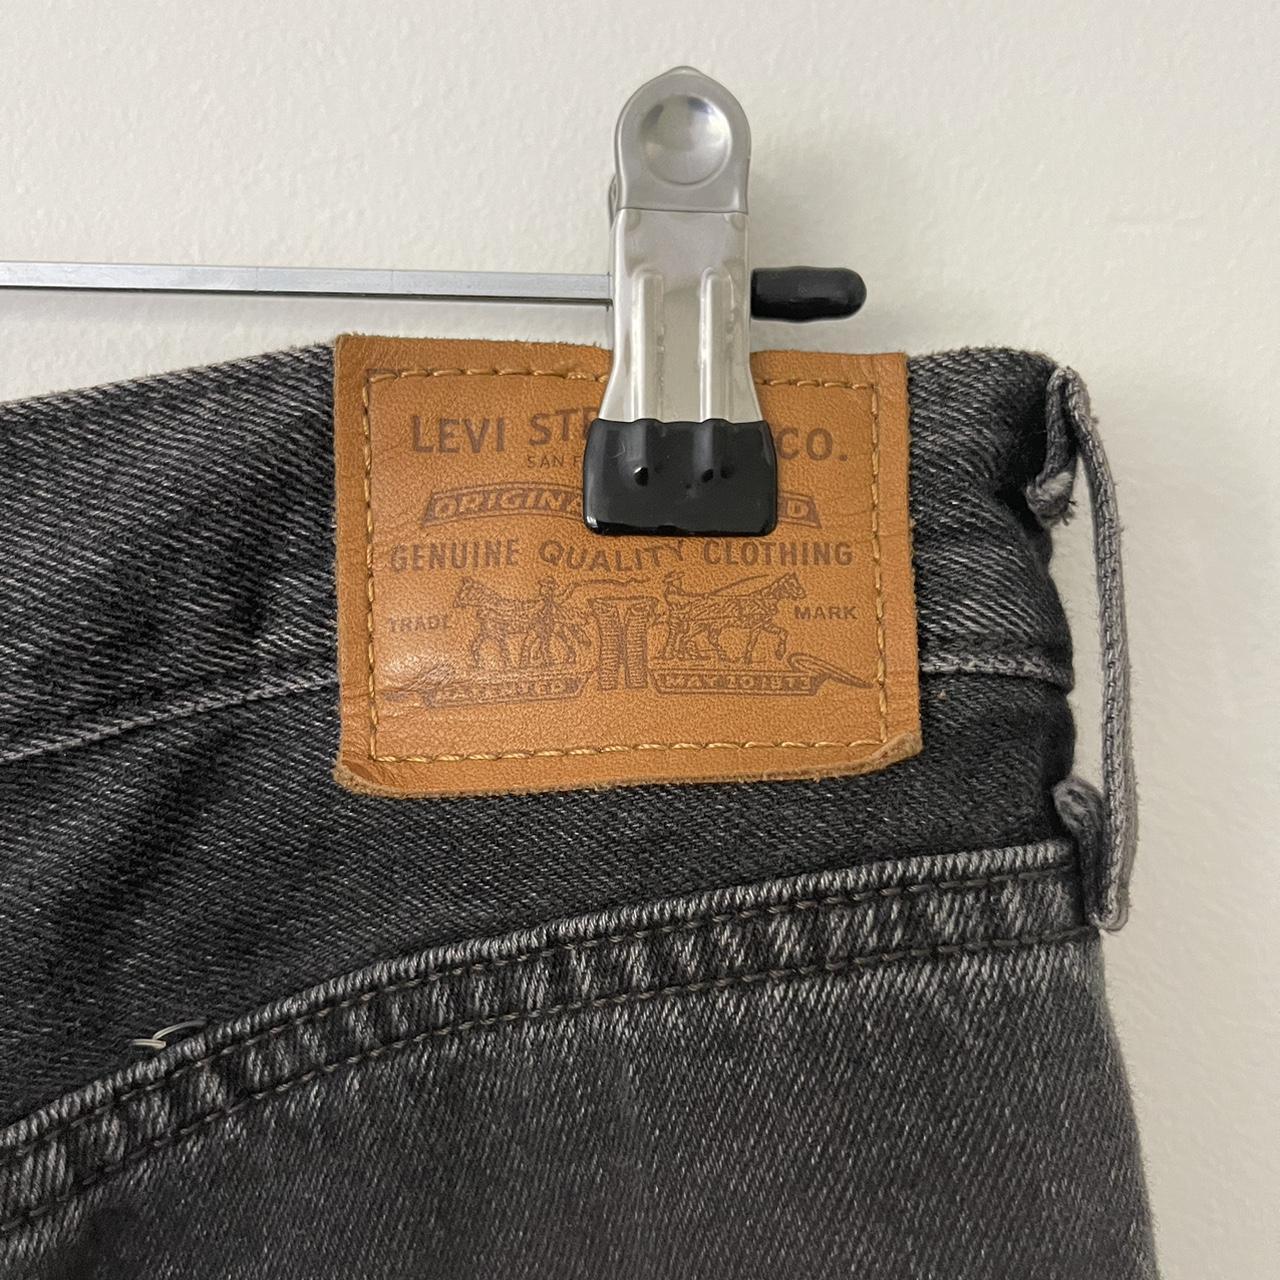 Levi Dad jeans - too big for me now - Depop